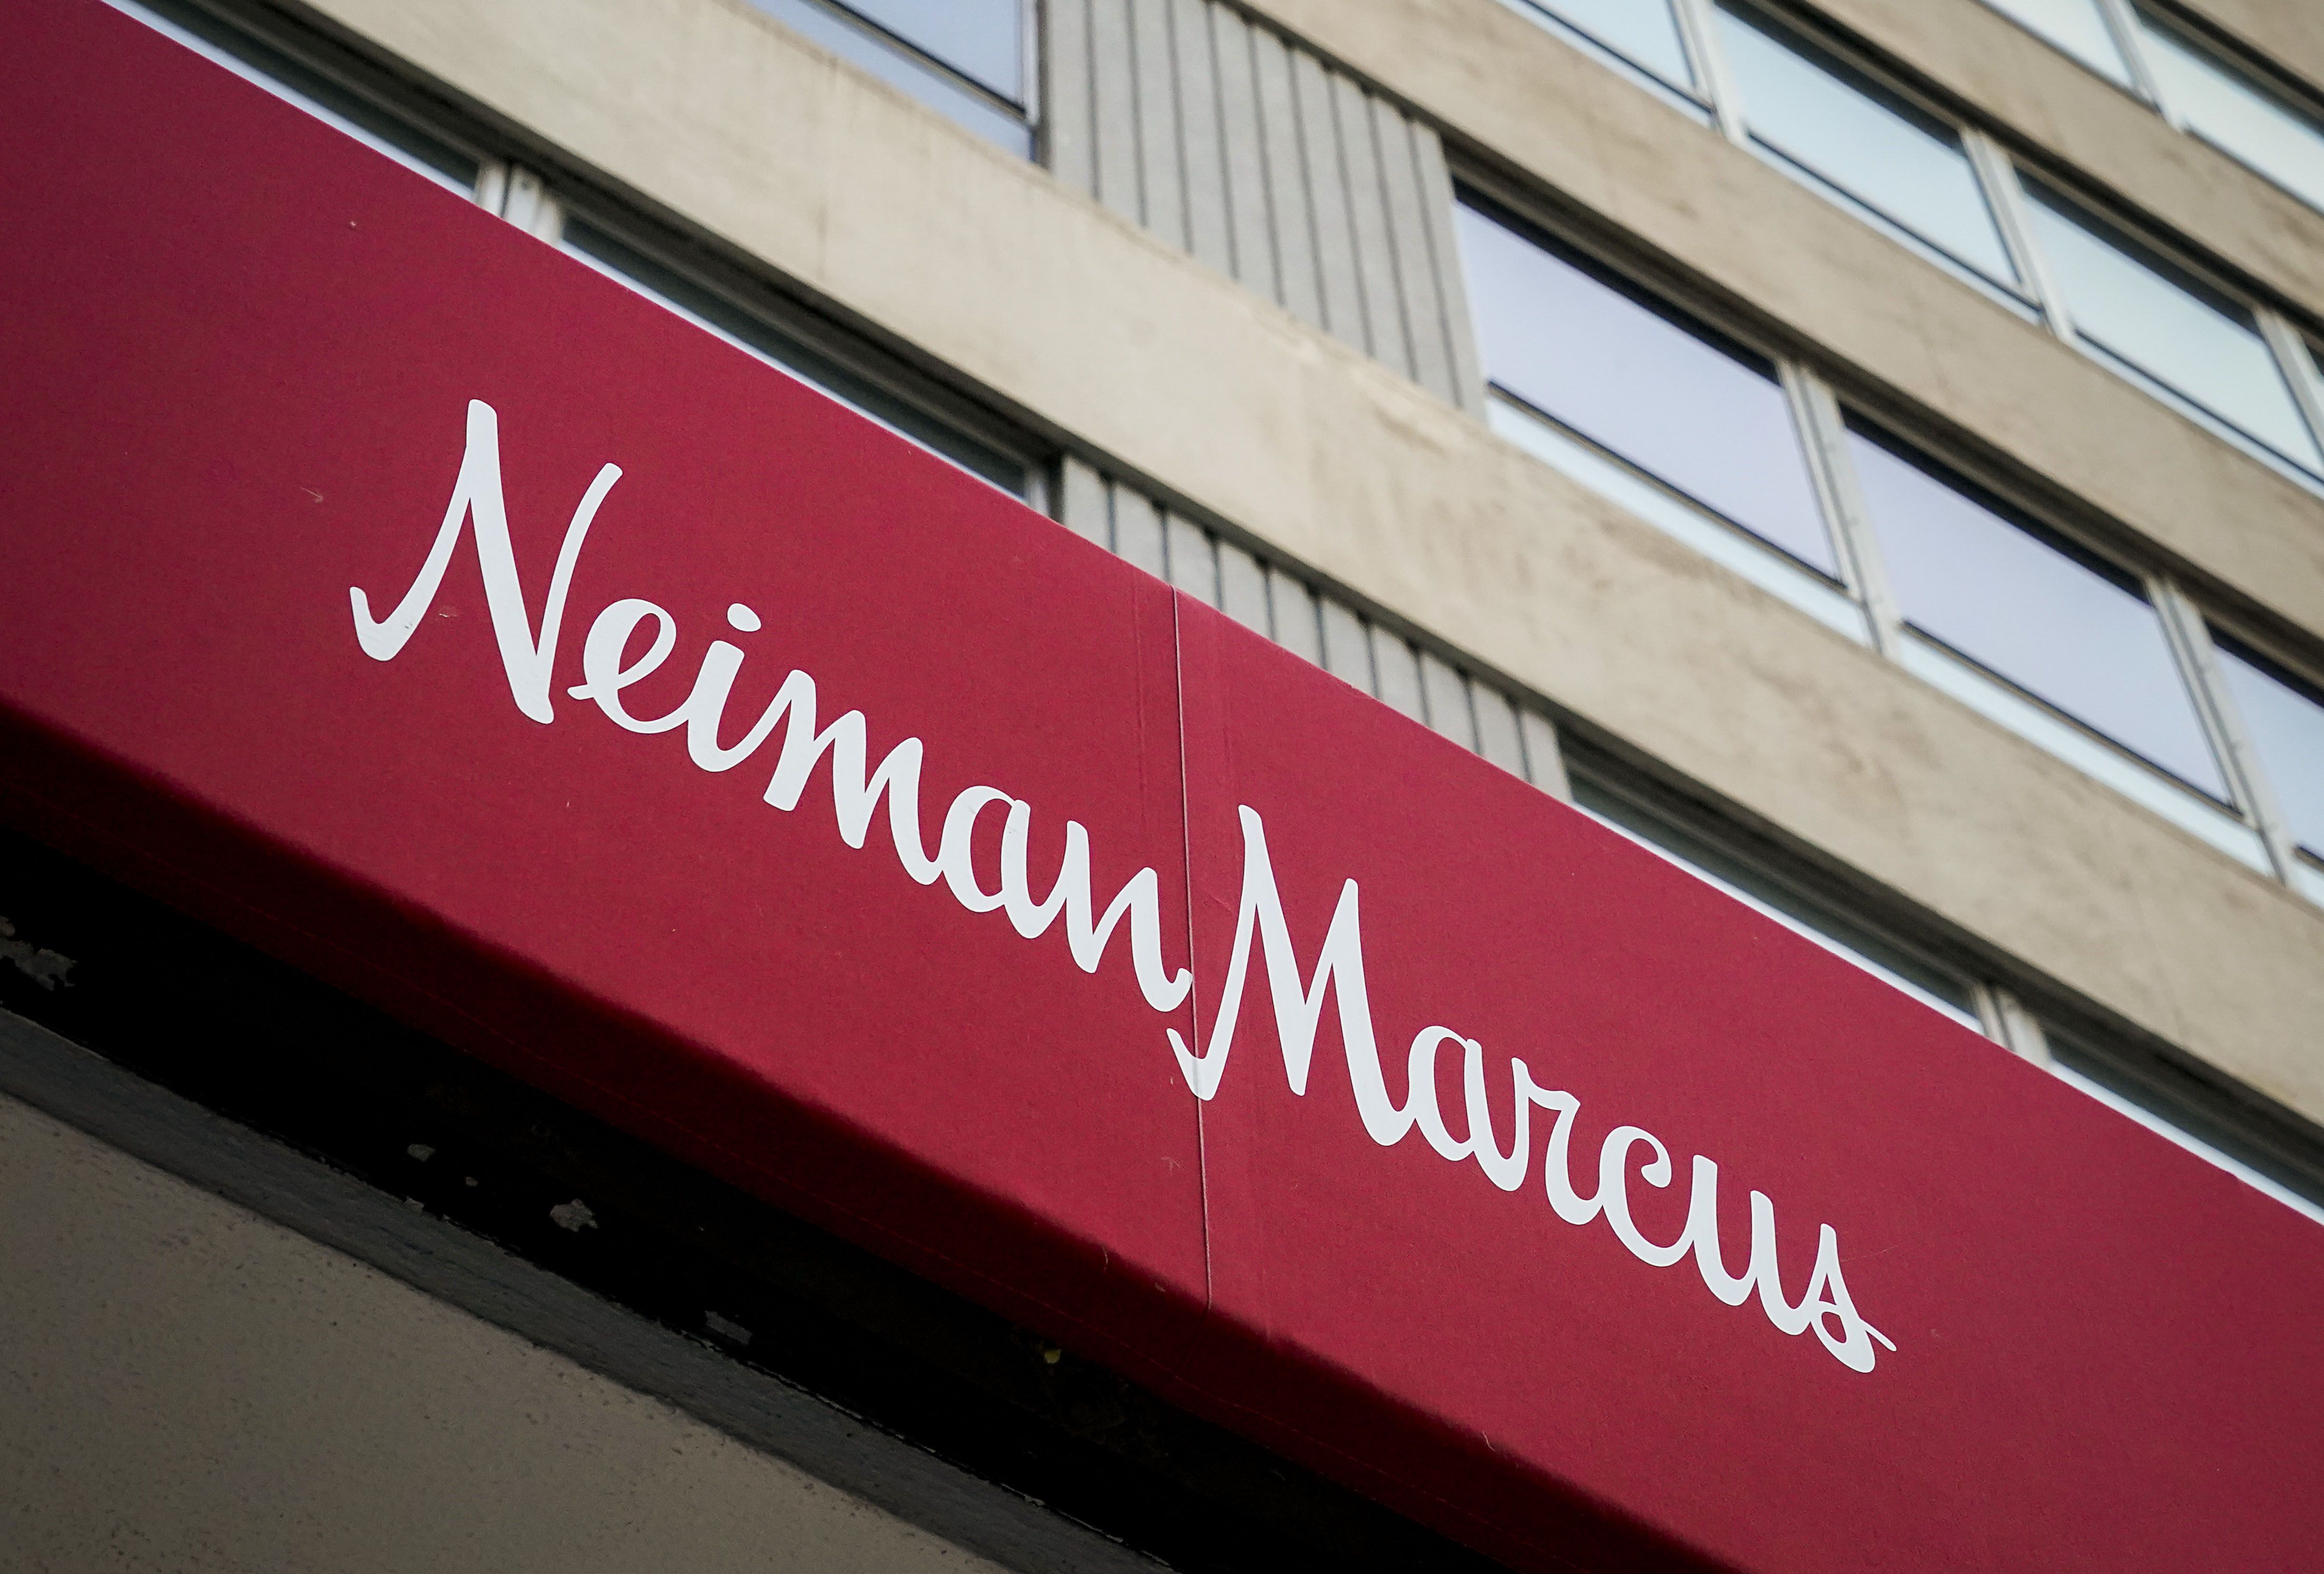 How To Activate Neiman Marcus Credit Card? Neiman Marcus Credit